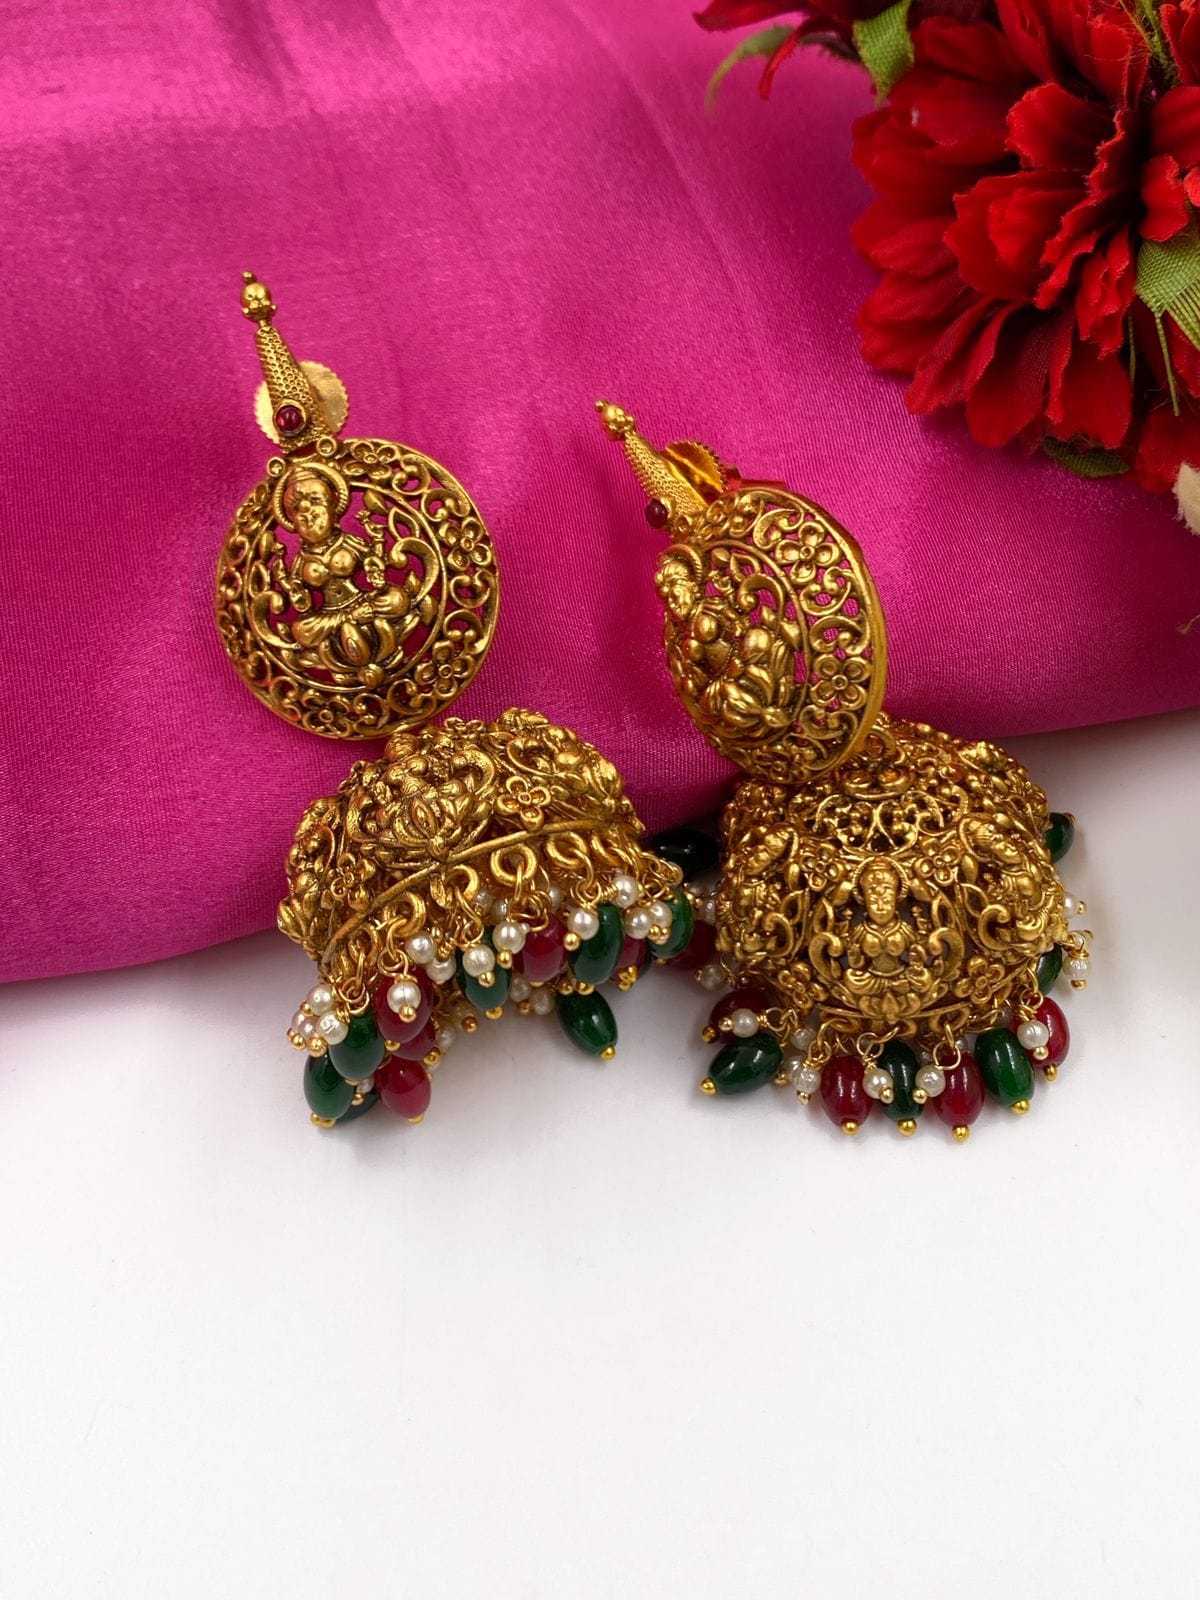 Gold Plated Goddess Lakshmi Temple Jhumka Earrings By Gehna Shop Jhumka earrings